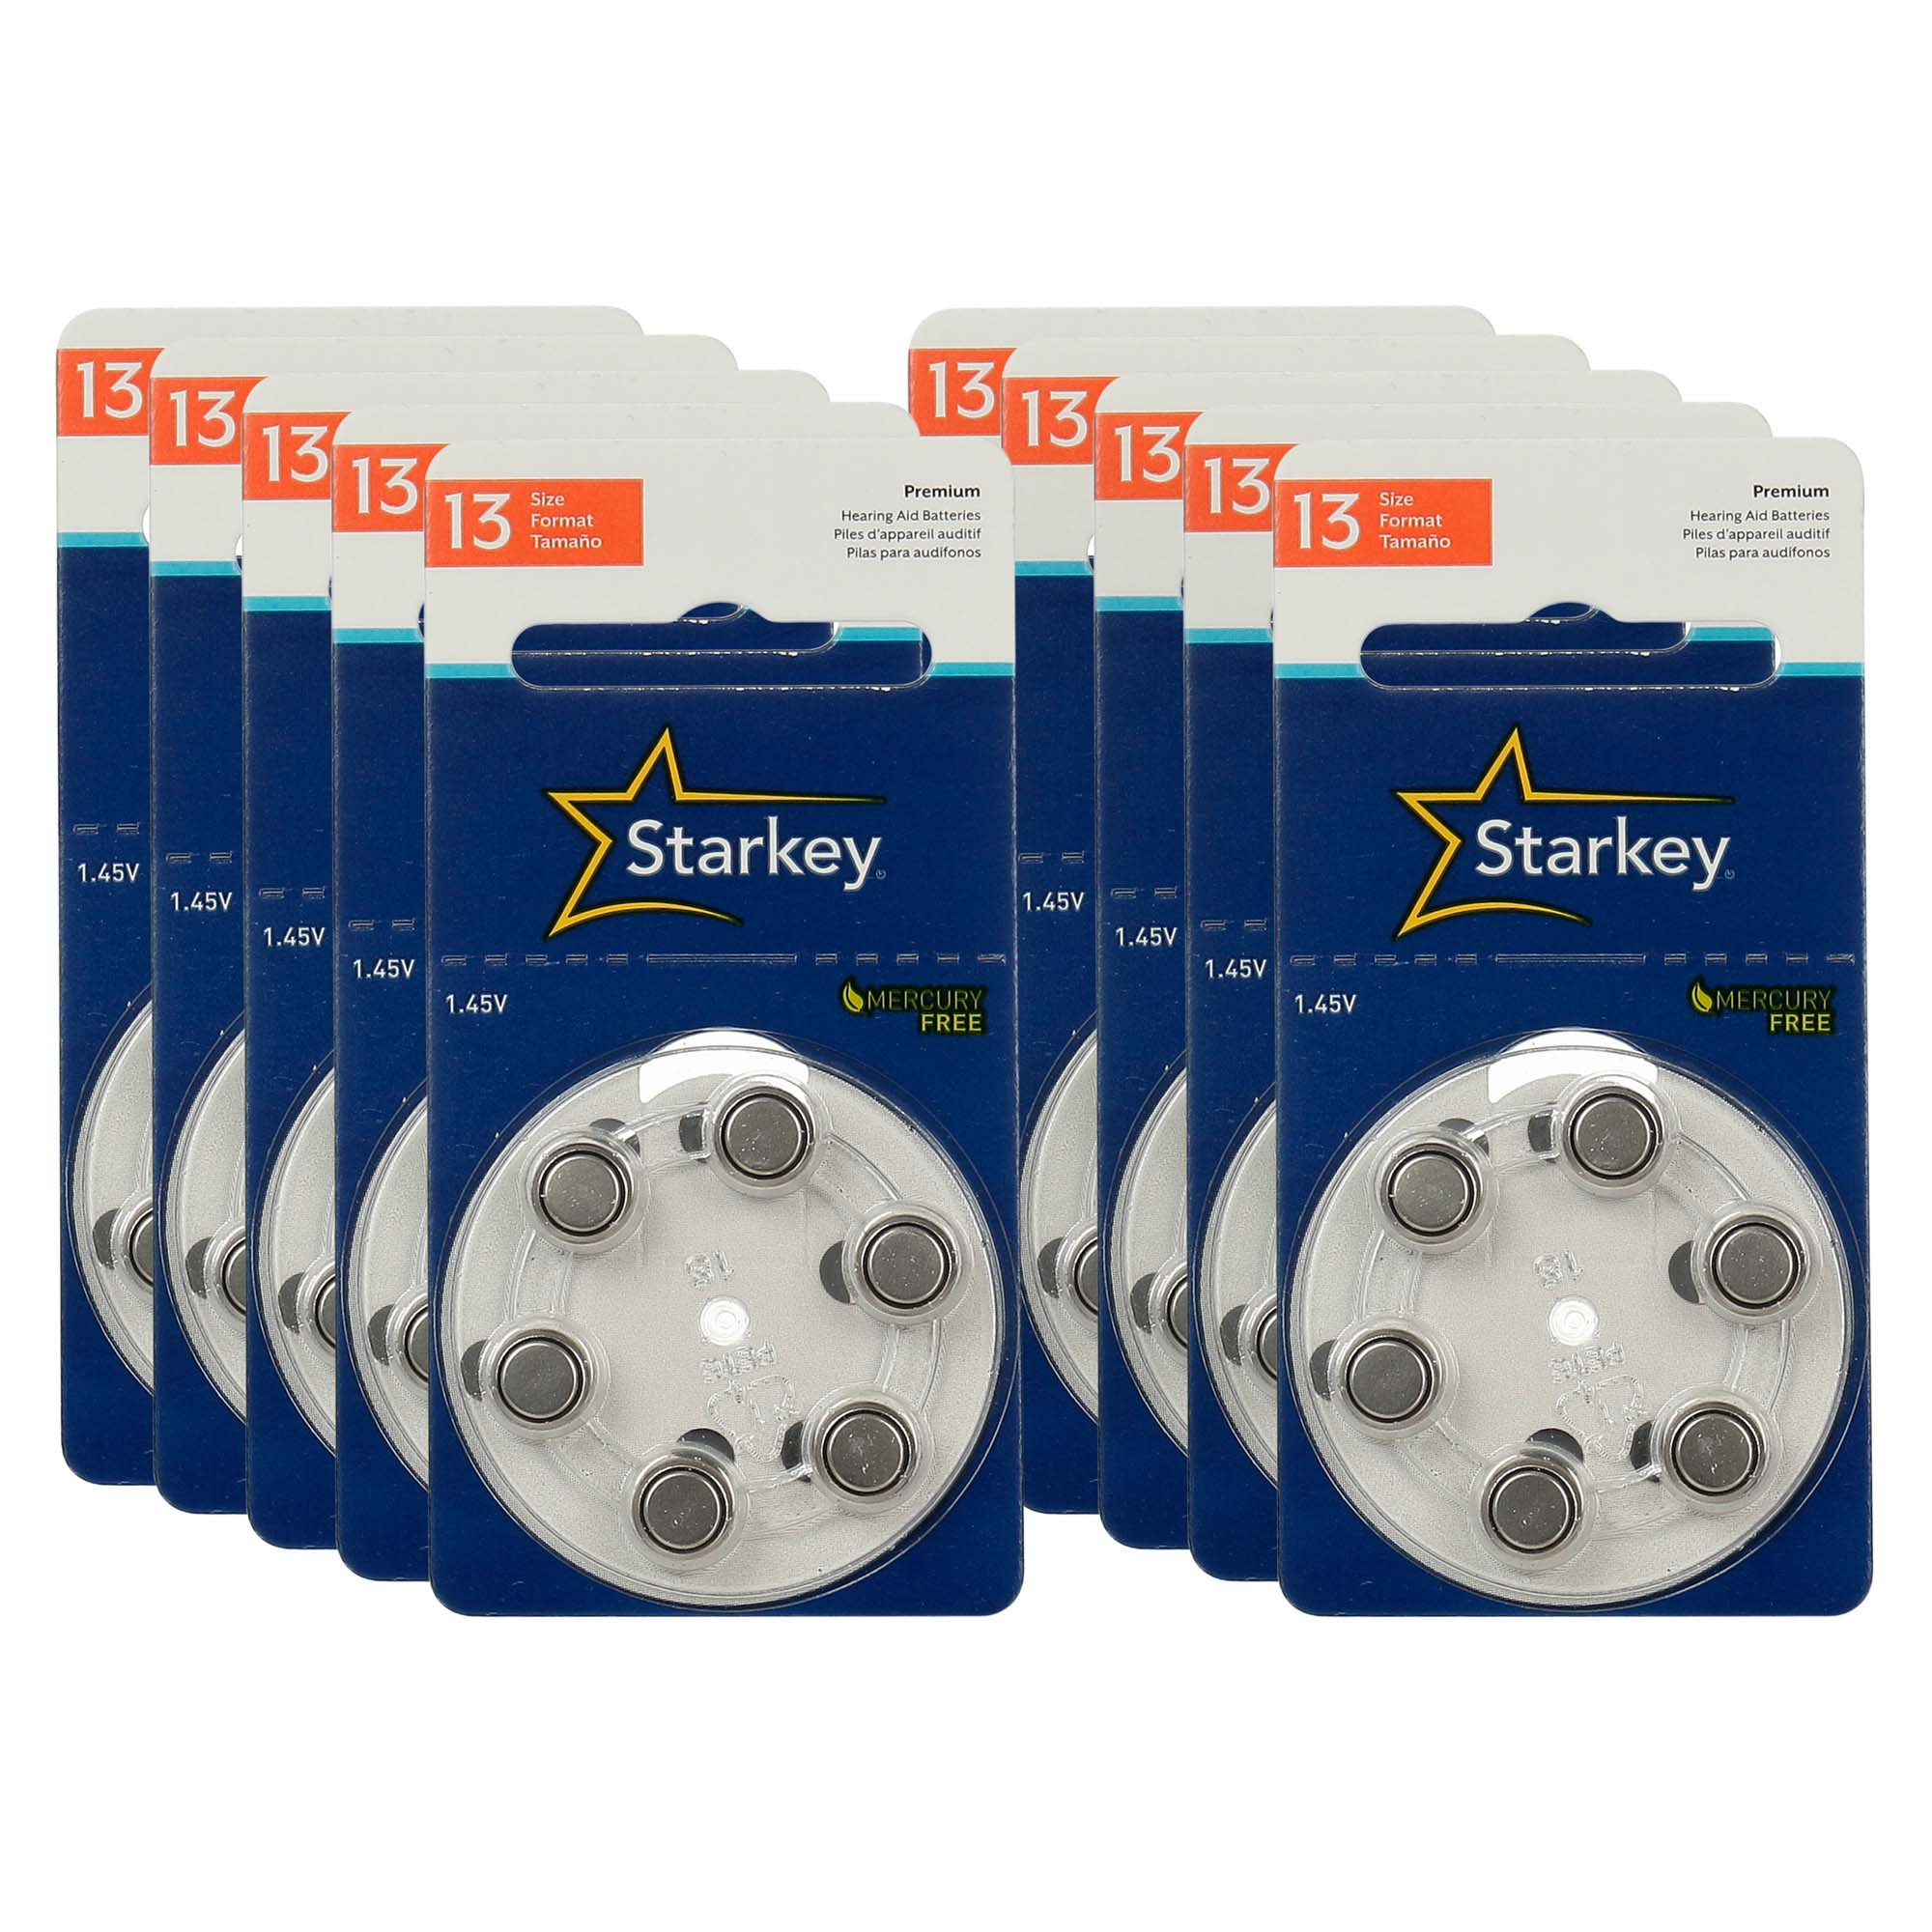 Starkey S13 / PR48 - 10 Cartelas - 60 Baterias para Aparelho Auditivo